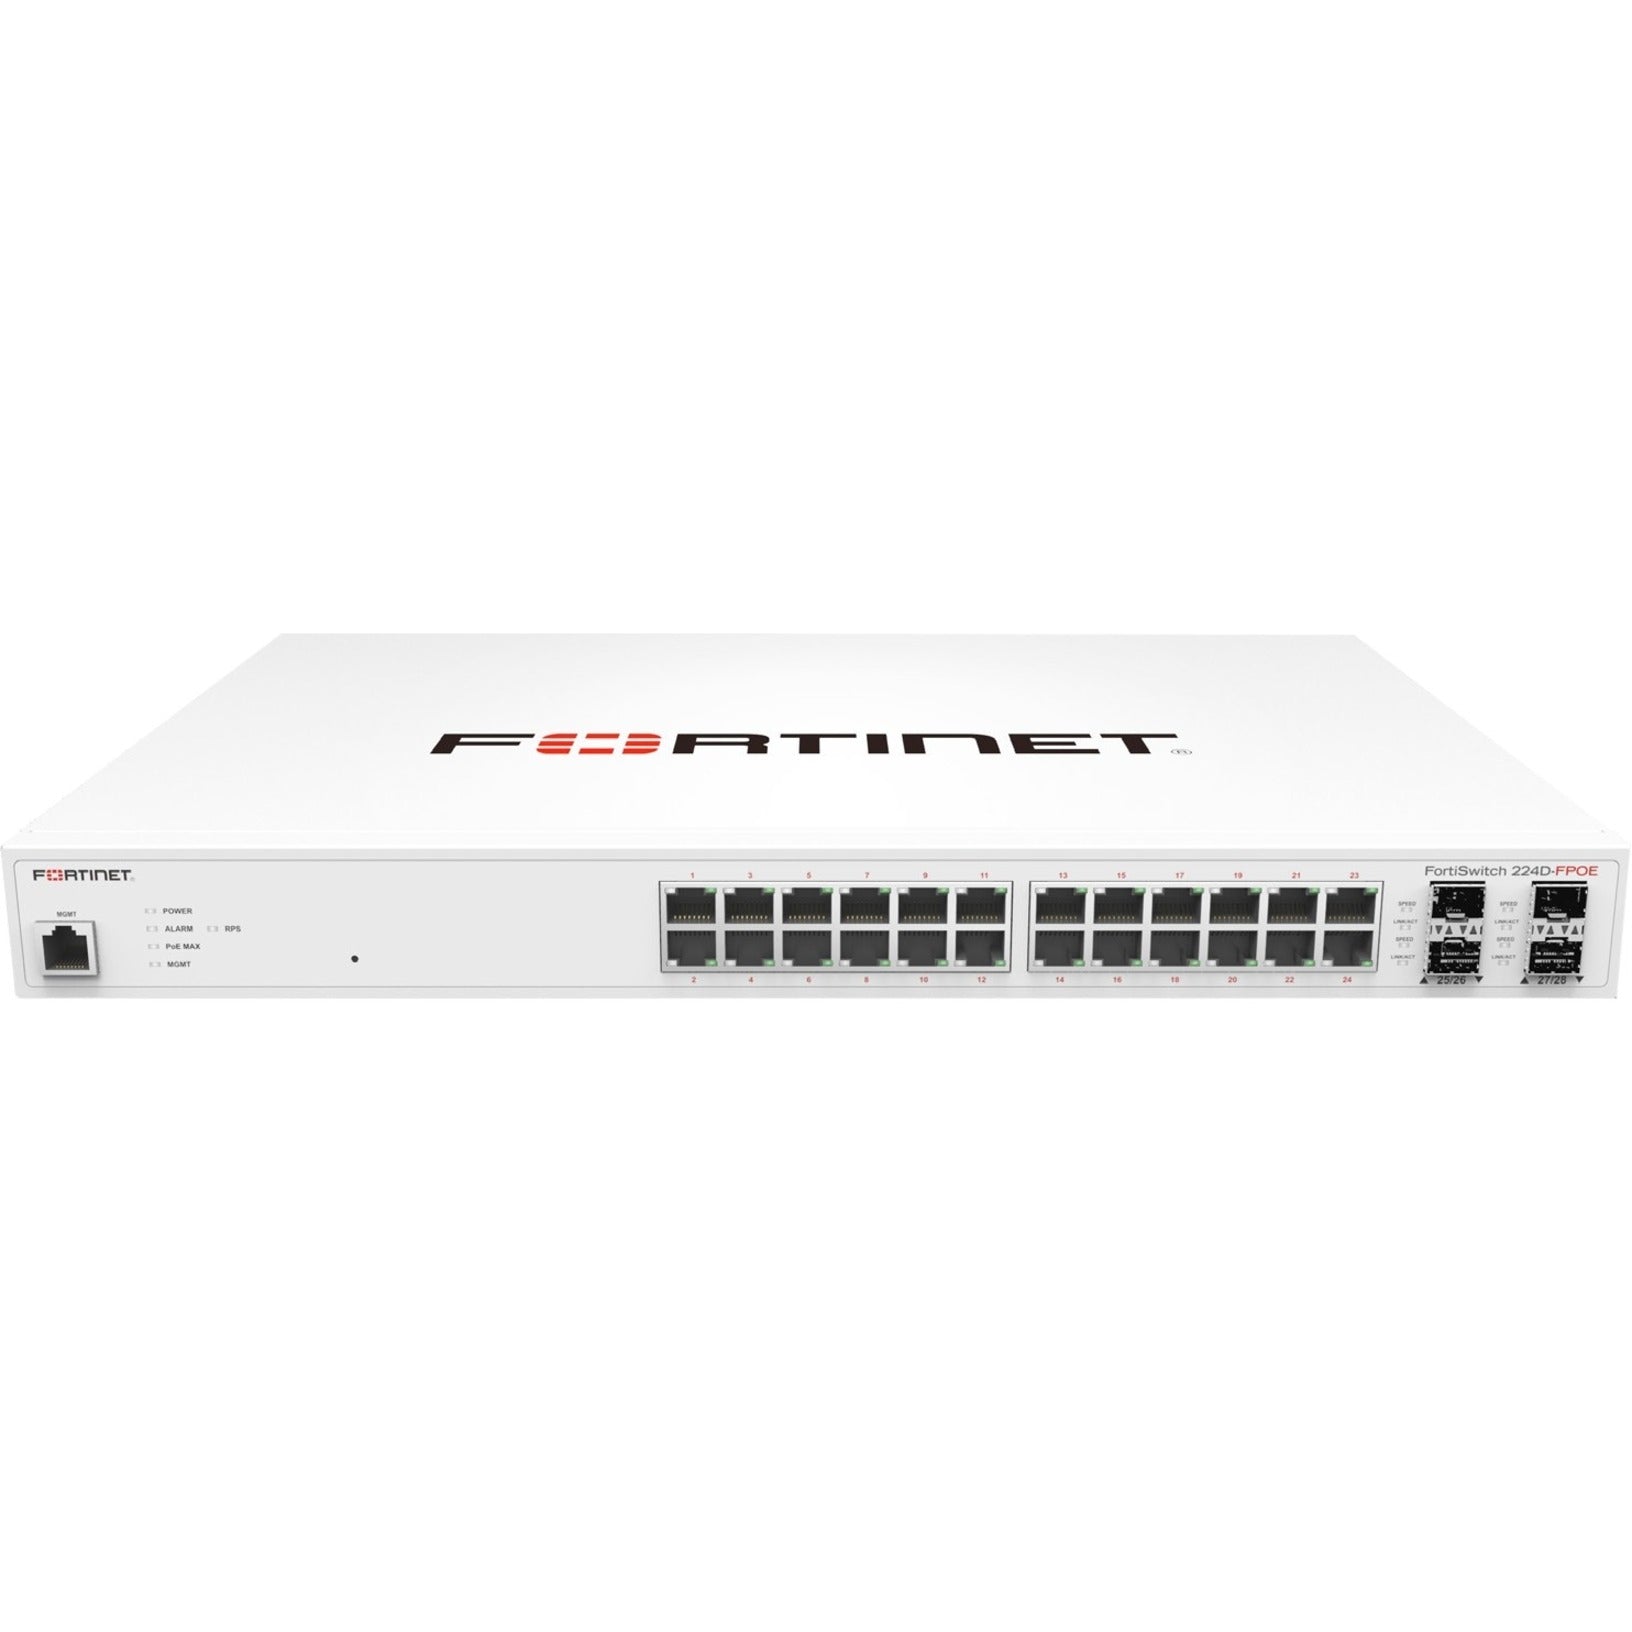 Fortinet FS-224D-FPOE FortiSwitch 224D-FPOE Ethernet Switch, 24 Port Gigabit Ethernet, Lifetime Warranty, RoHS 2 Certified